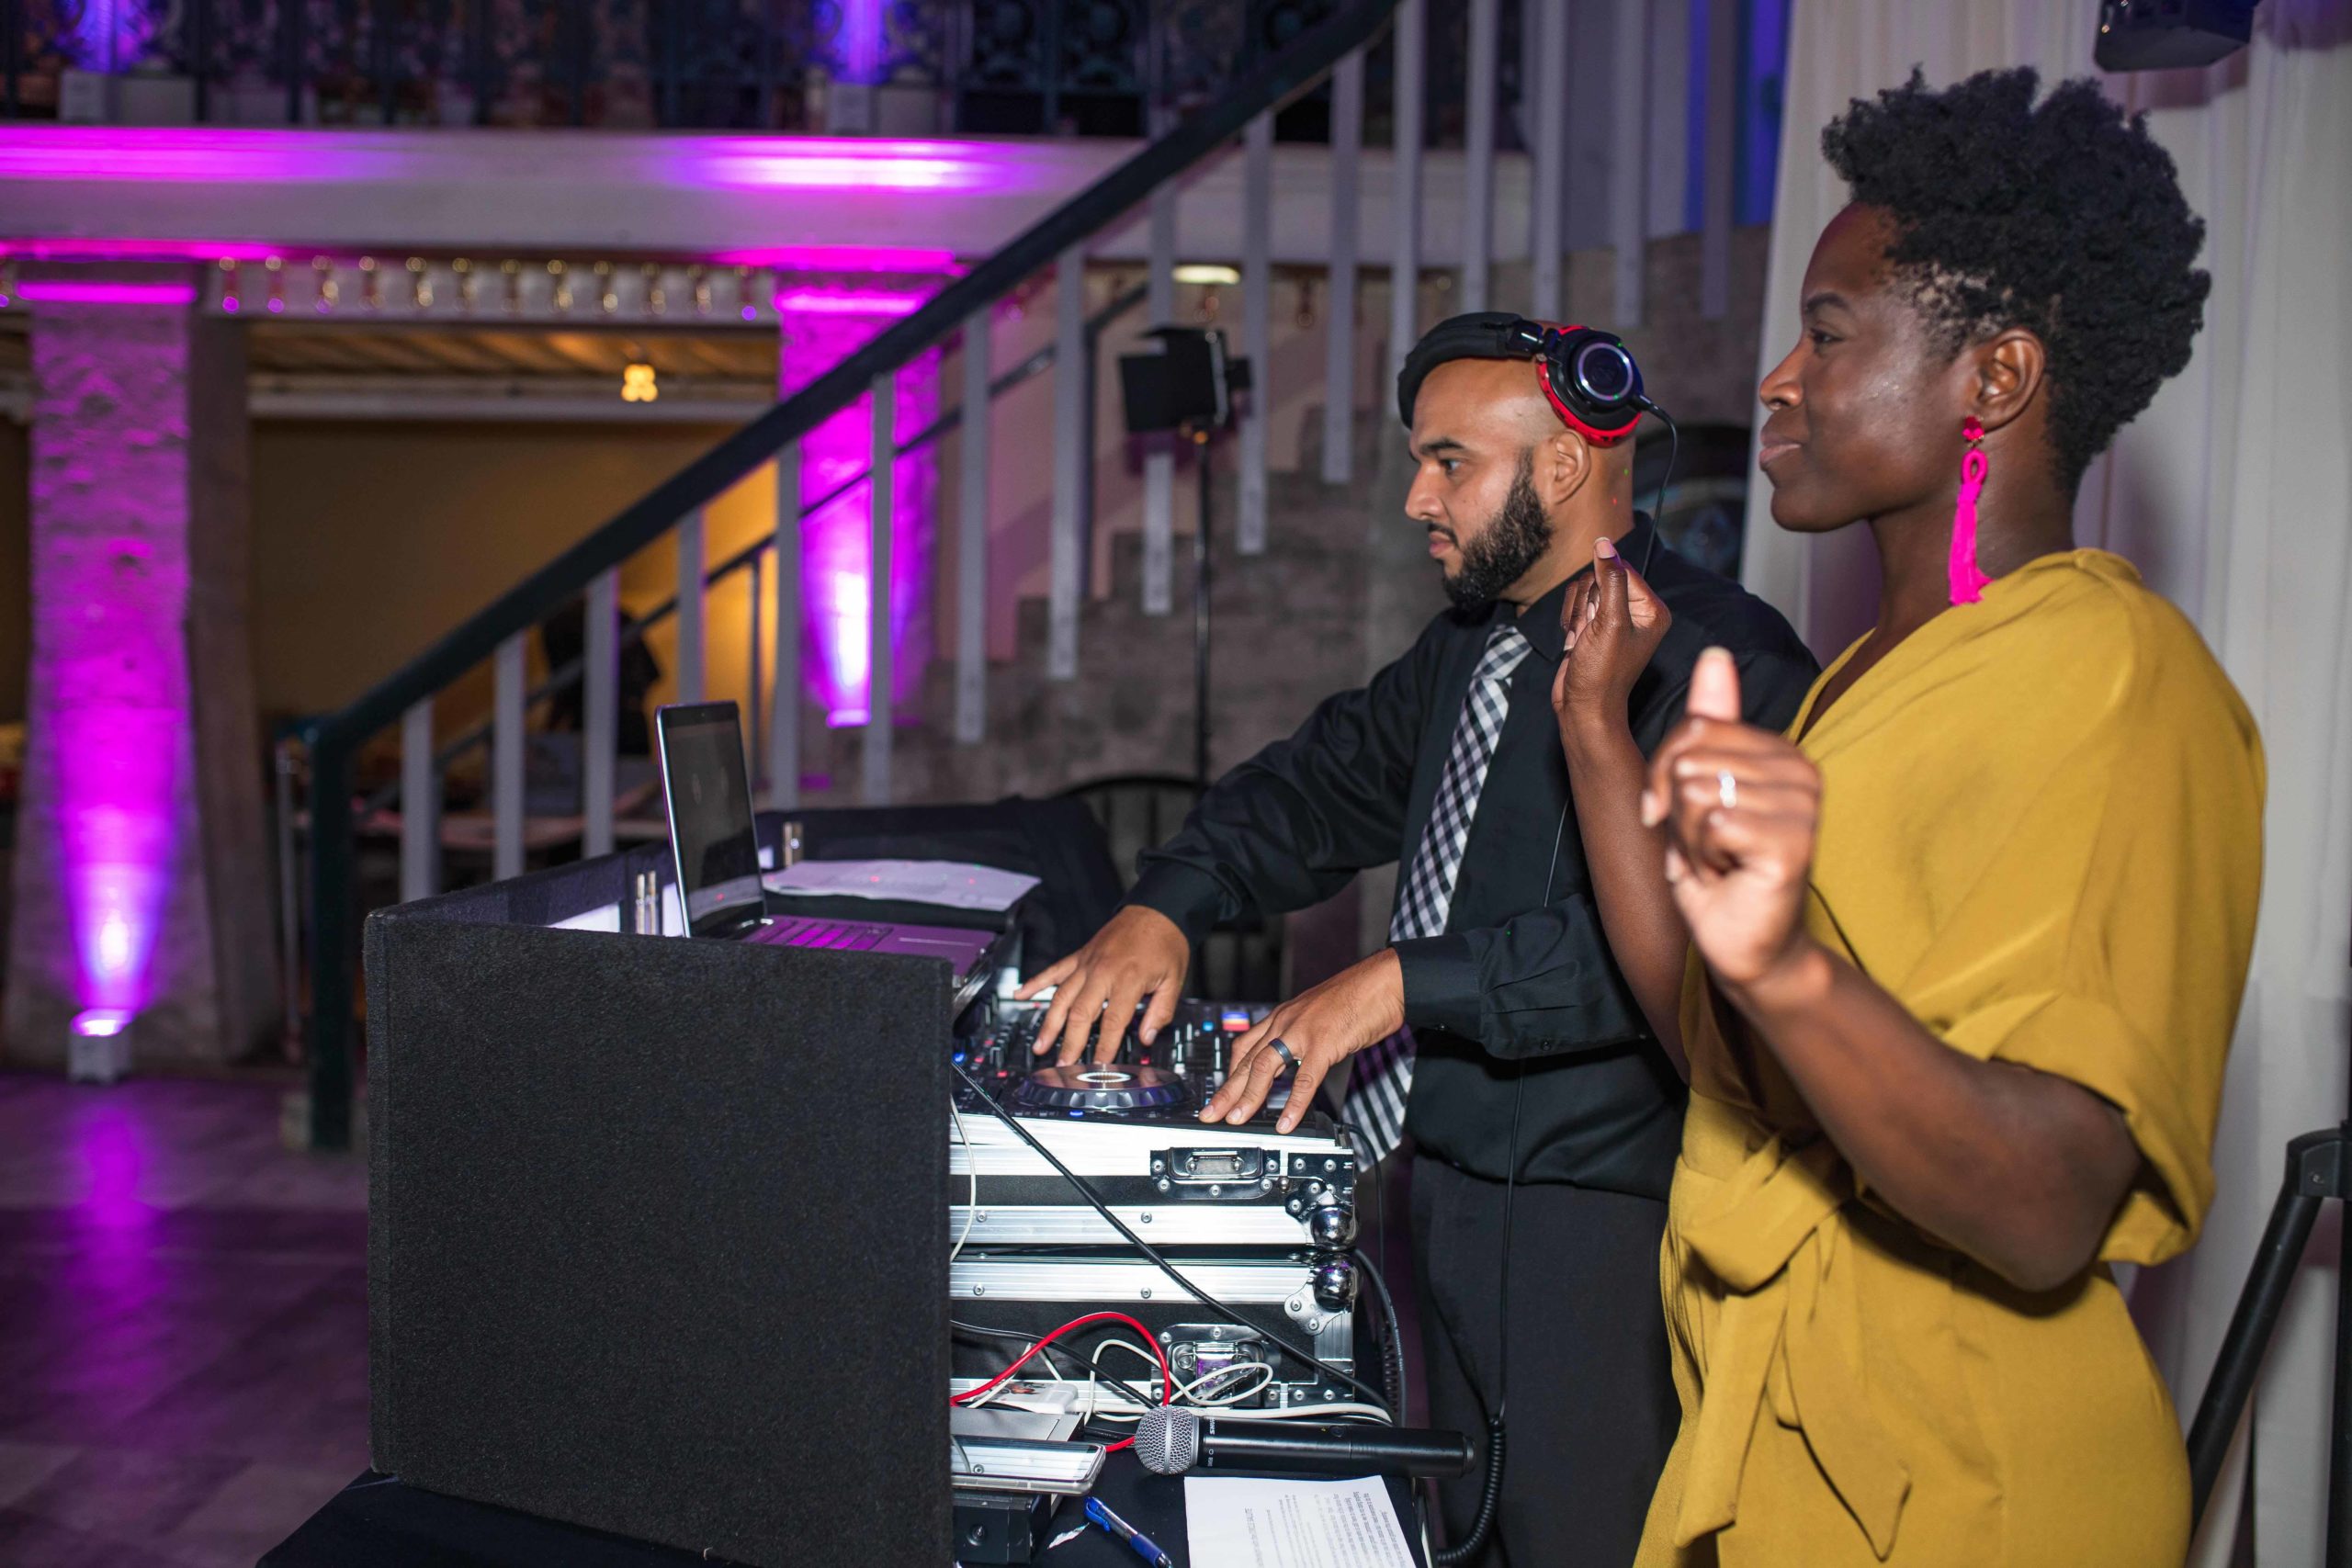 DJ April and Eddie dancing with the crowd during Orlando FL Wedding reception